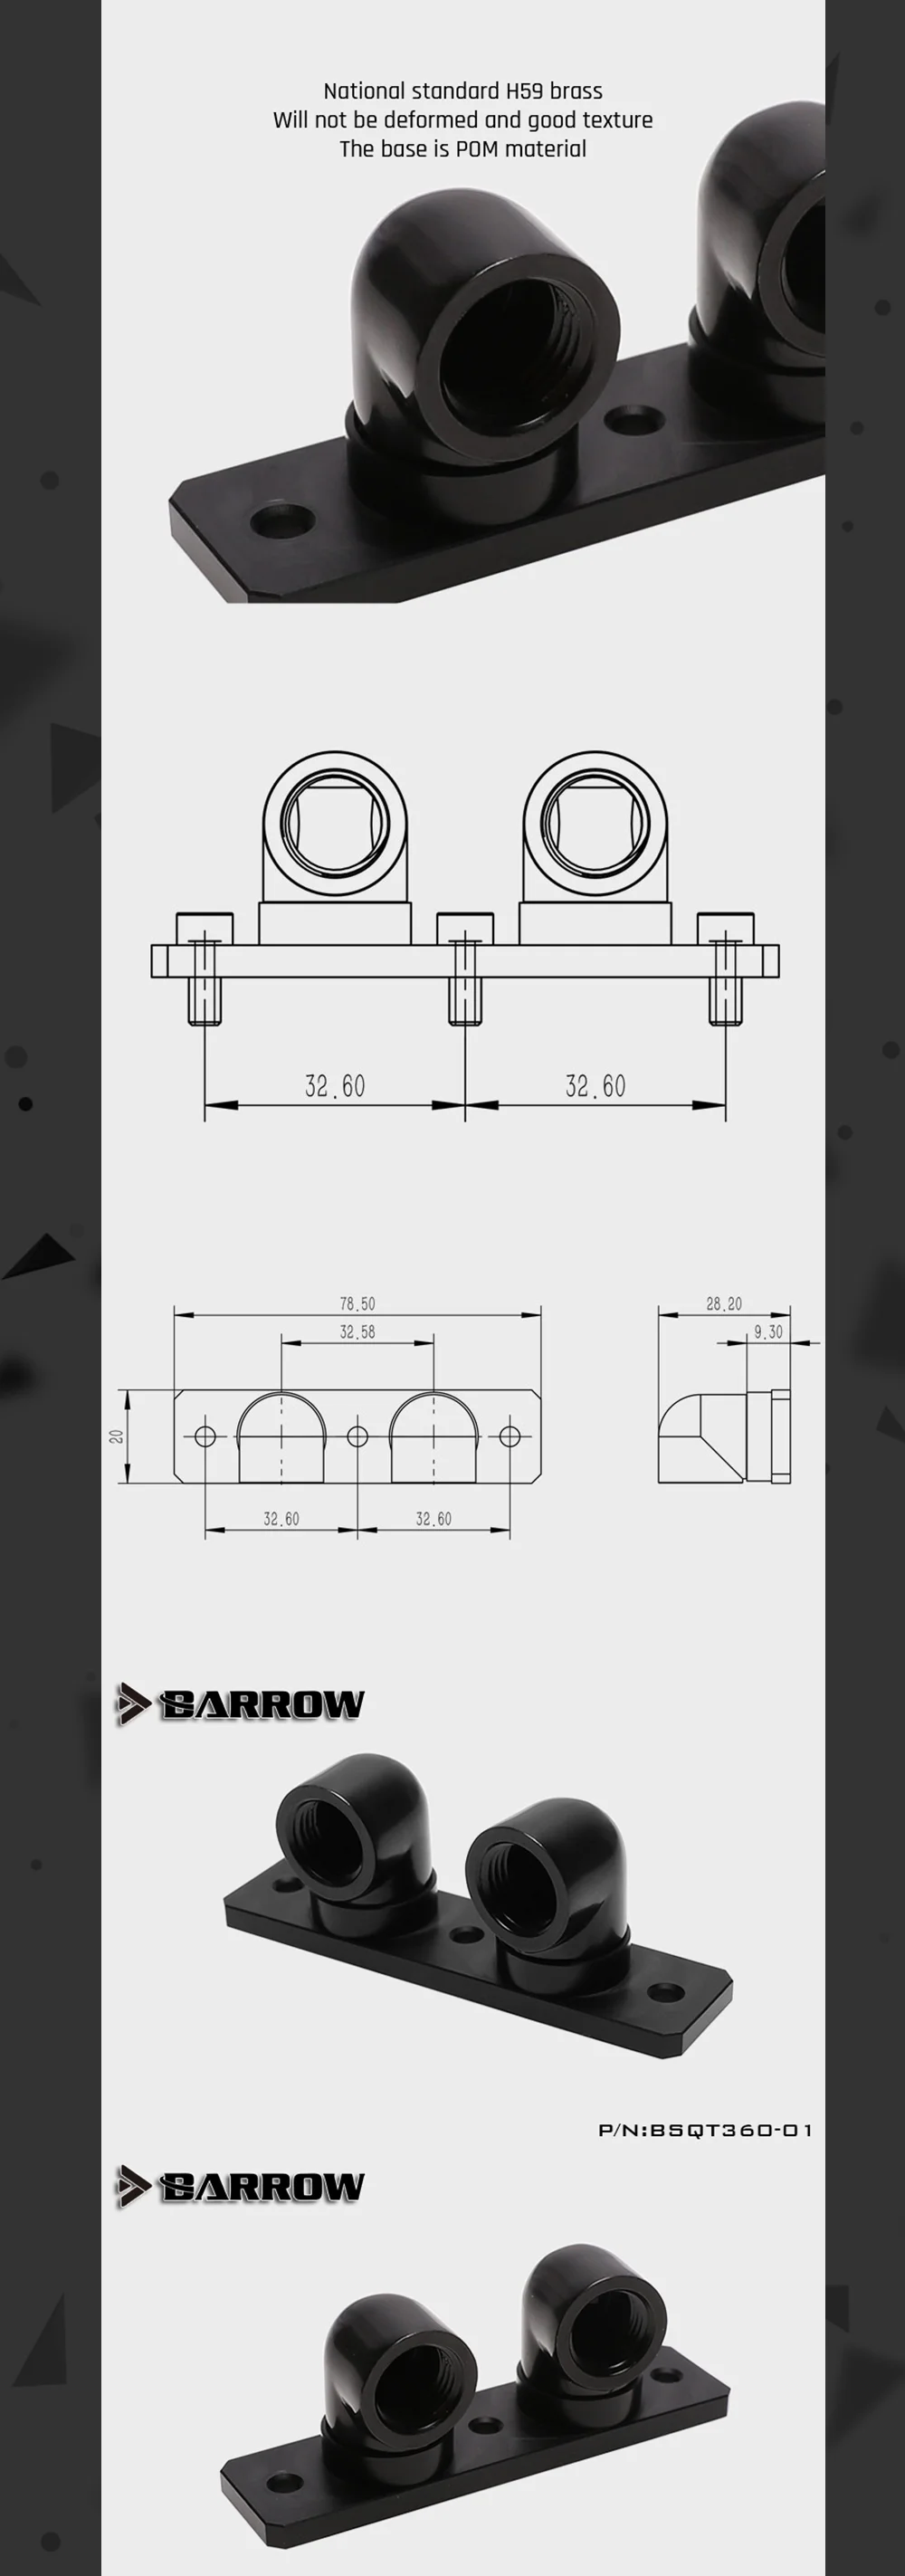 Barrow BSQT360-01, 360 Degree Rotating Bridge For Barrow GPU Block, With 90 Degree Change Direction  